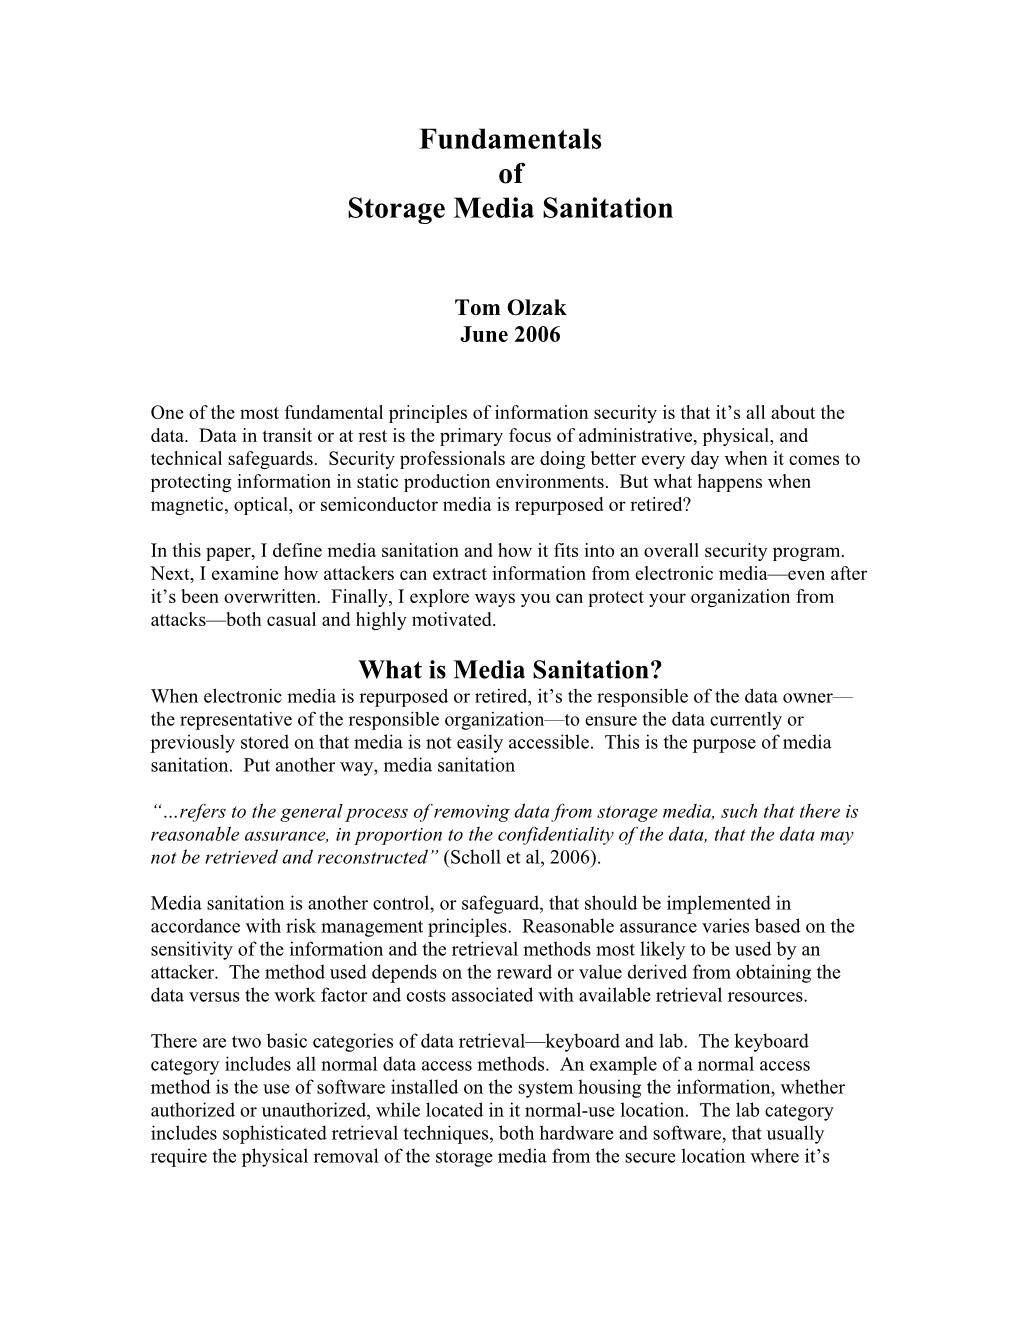 Fundamentals of Storage Media Sanitation